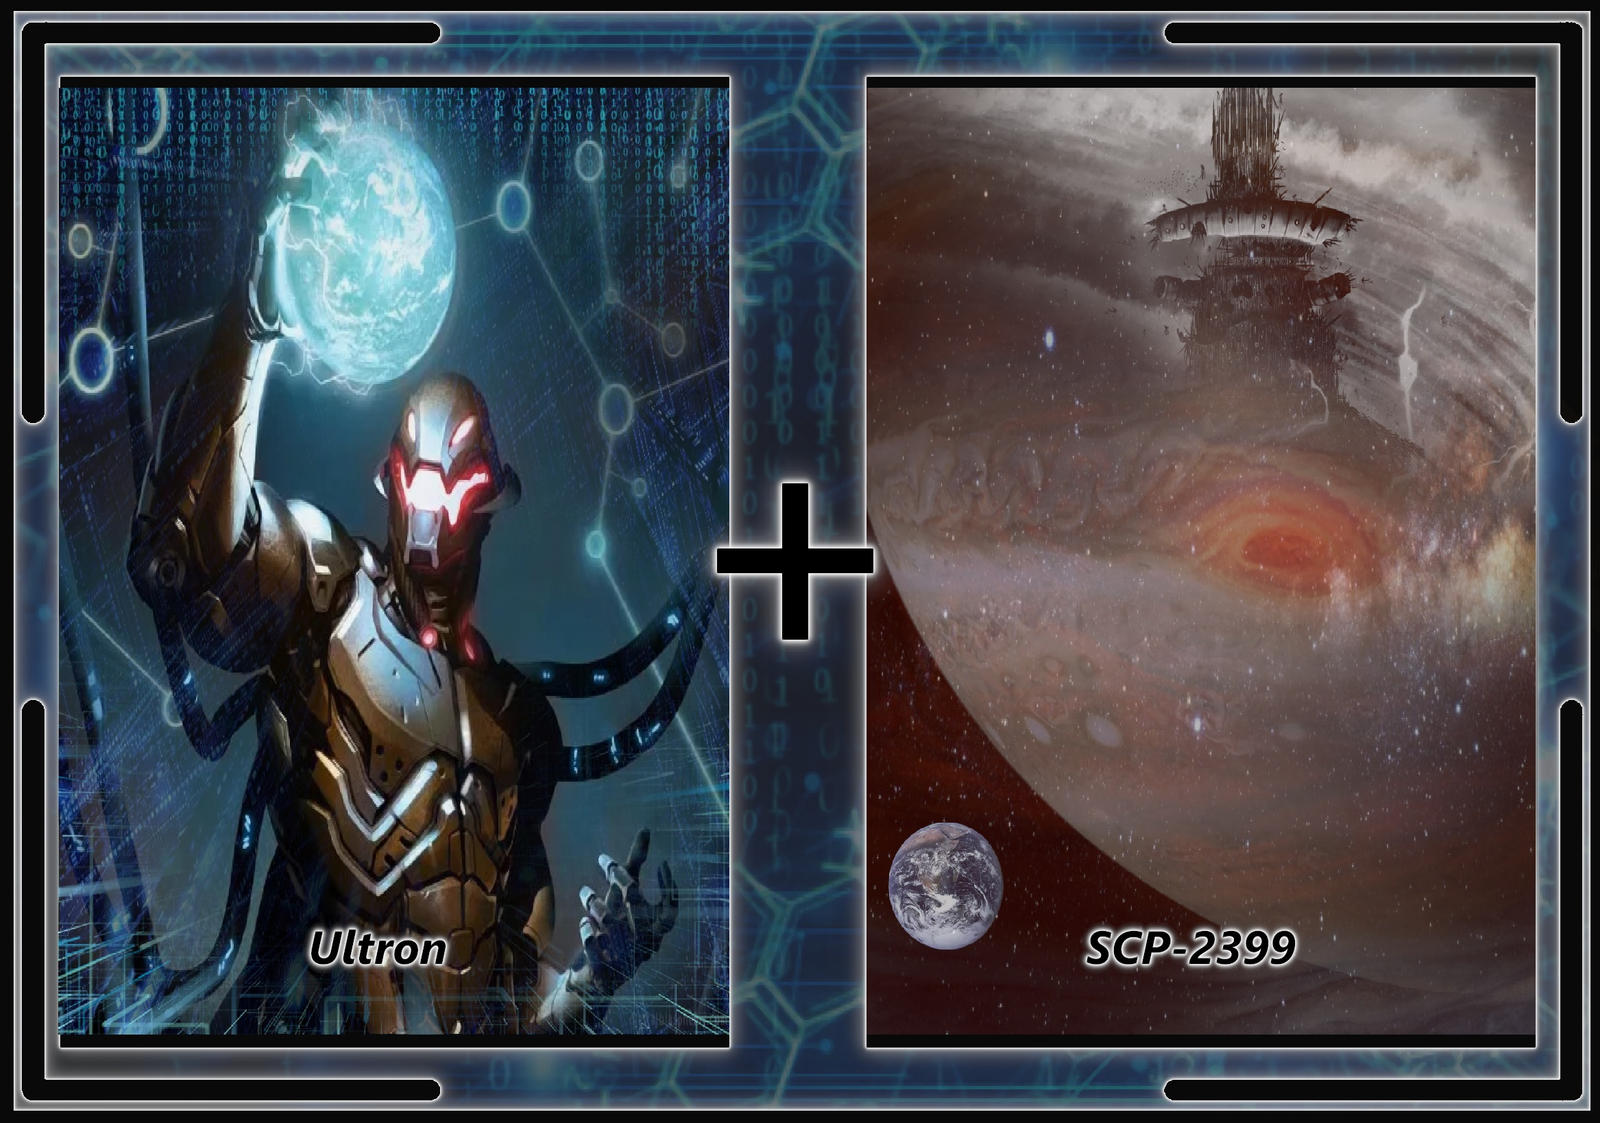 The Death Star VS SCP-2399 (Star Wars VS SCP Foundation)